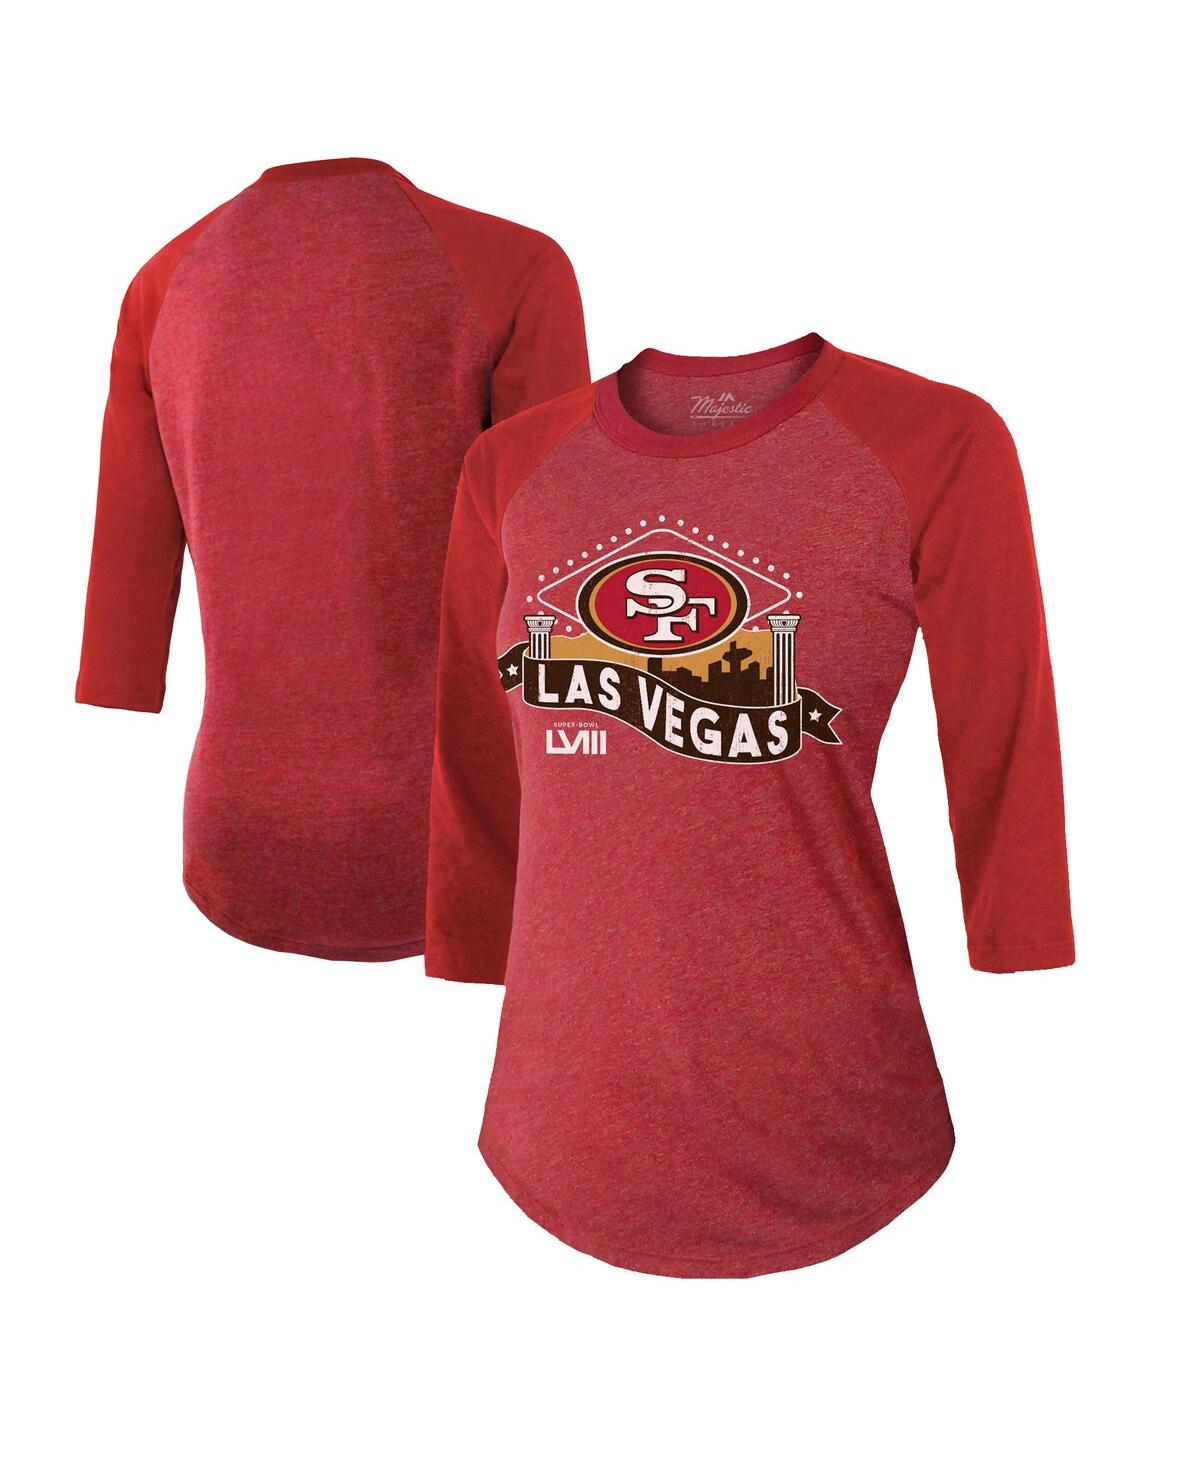 Women's Majestic Threads Scarlet San Francisco 49ers Super Bowl Lviii Vegas Raglan 3/4-Sleeve Tri-Blend T-shirt - Scarlet